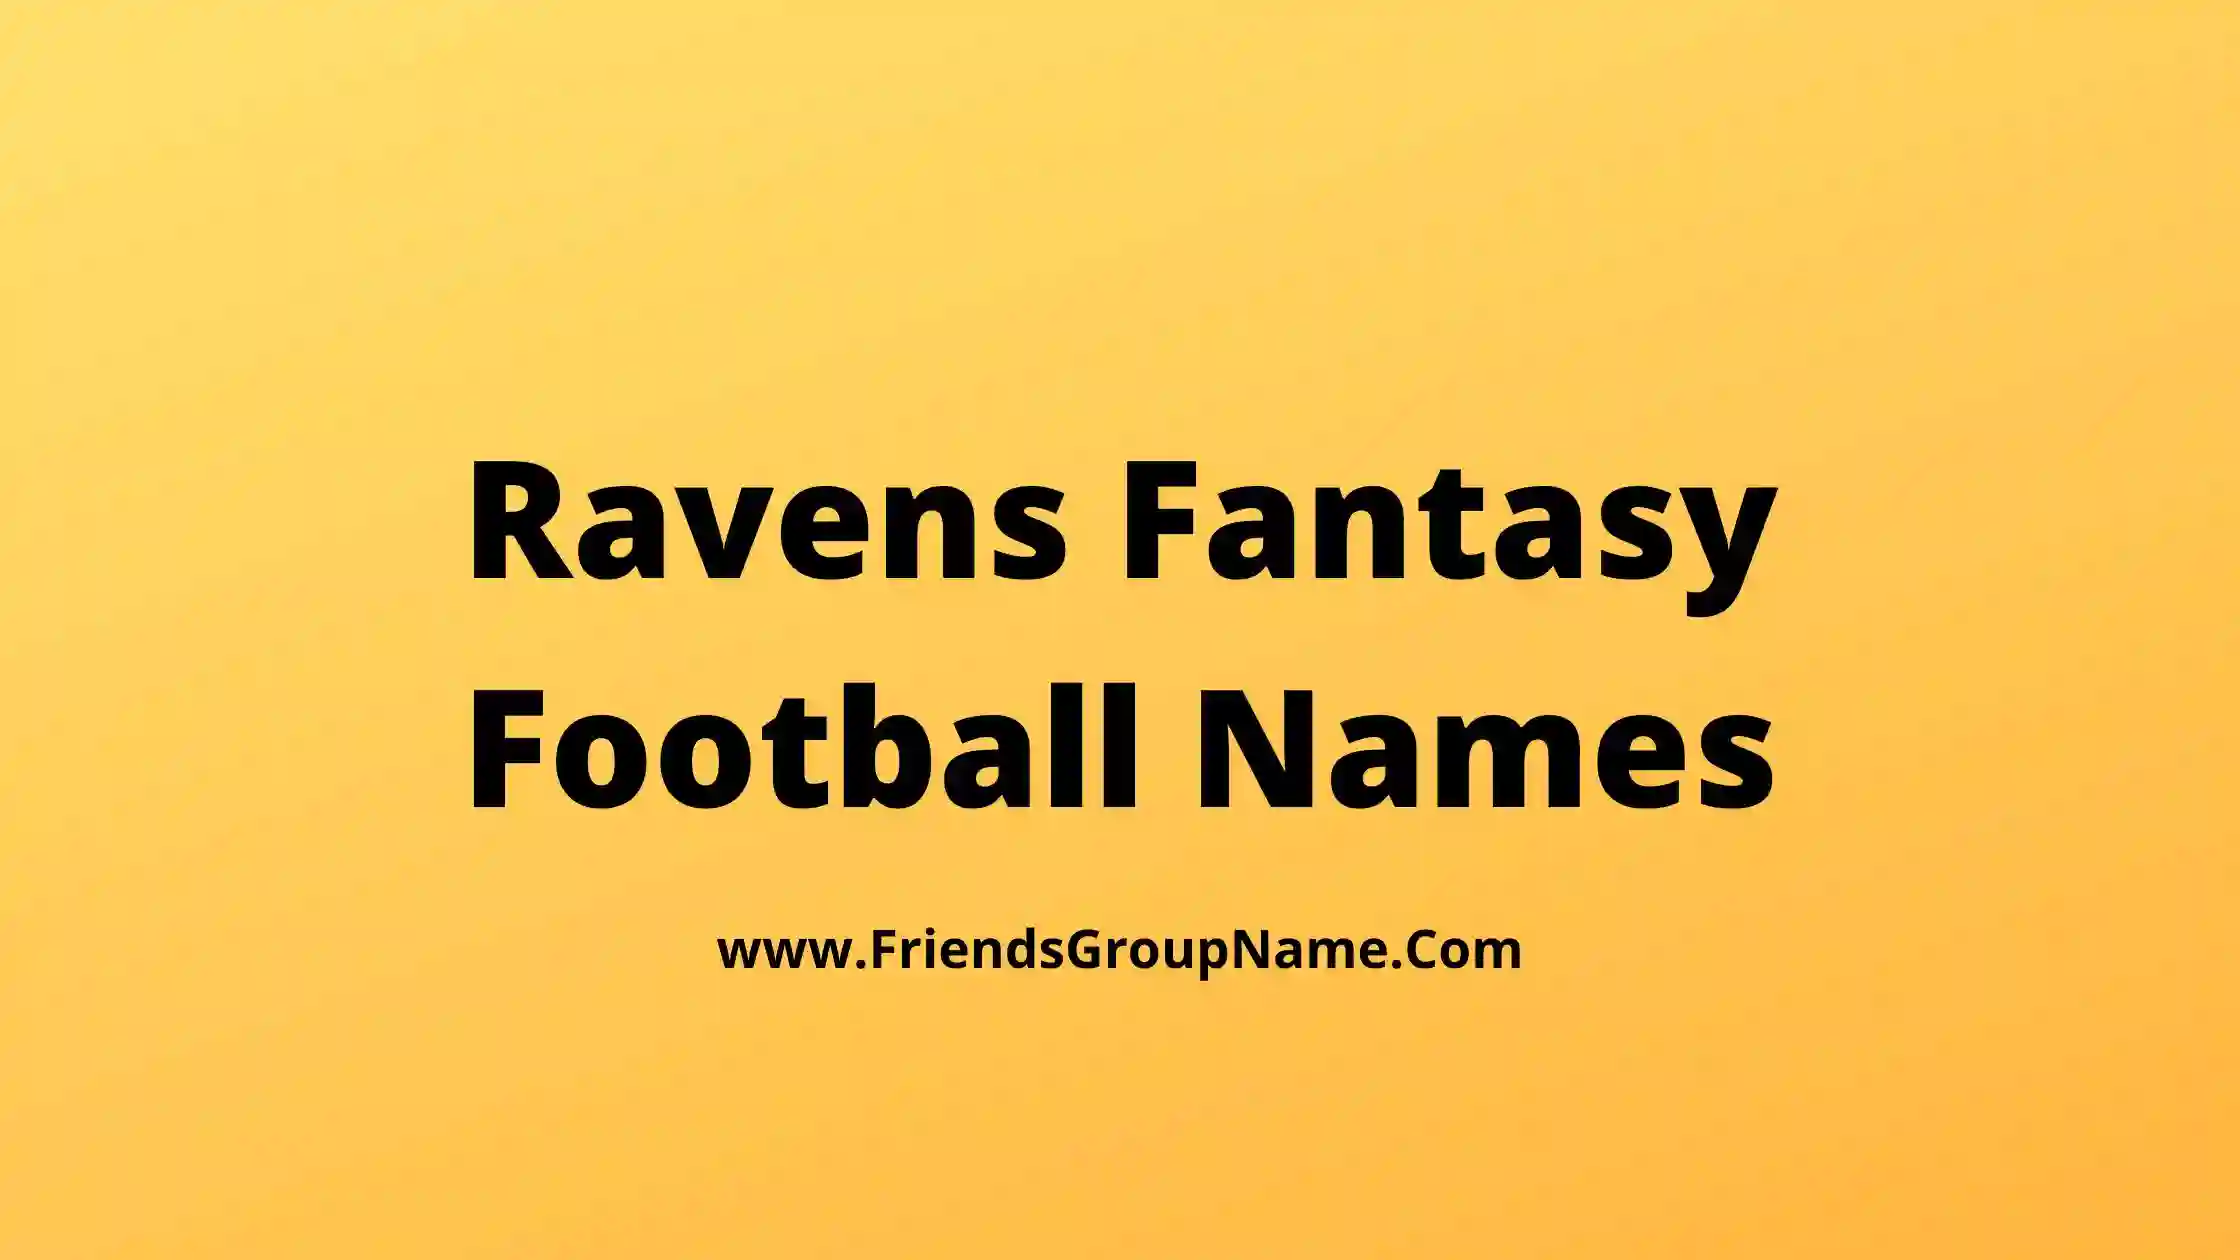 Ravens Fantasy Football Names